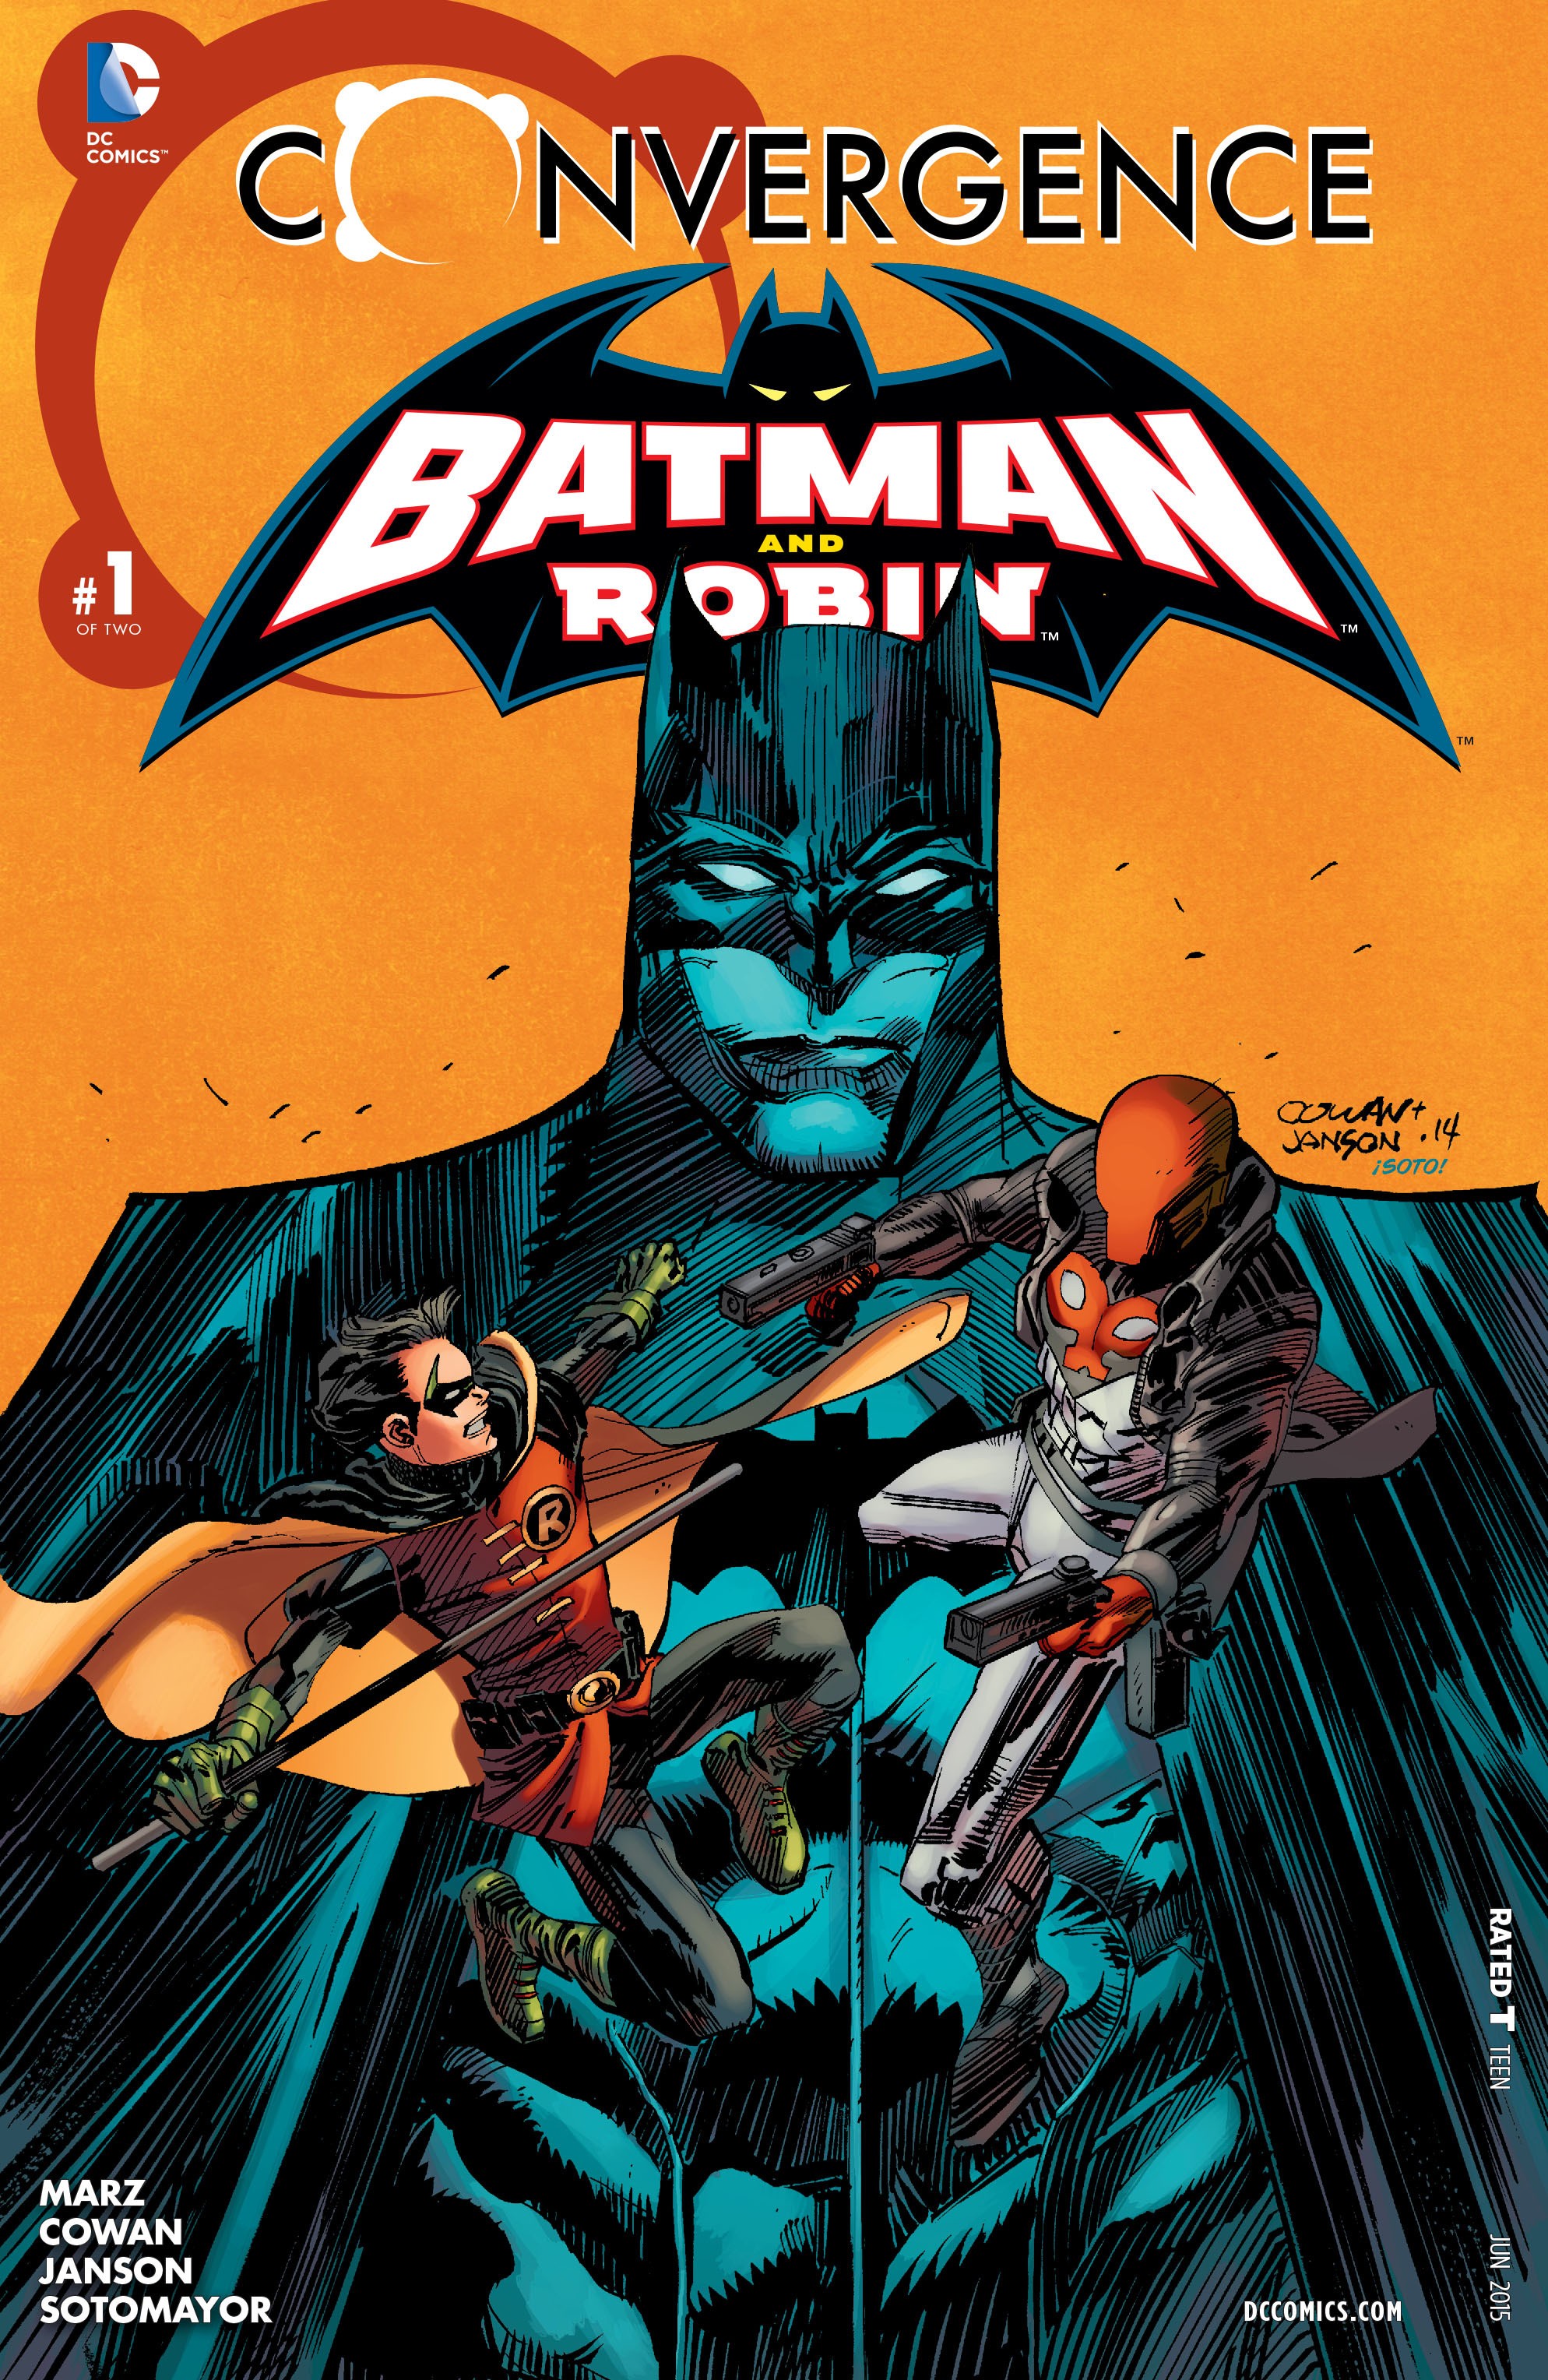 Convergence: Batman and Robin Vol. 1 #1